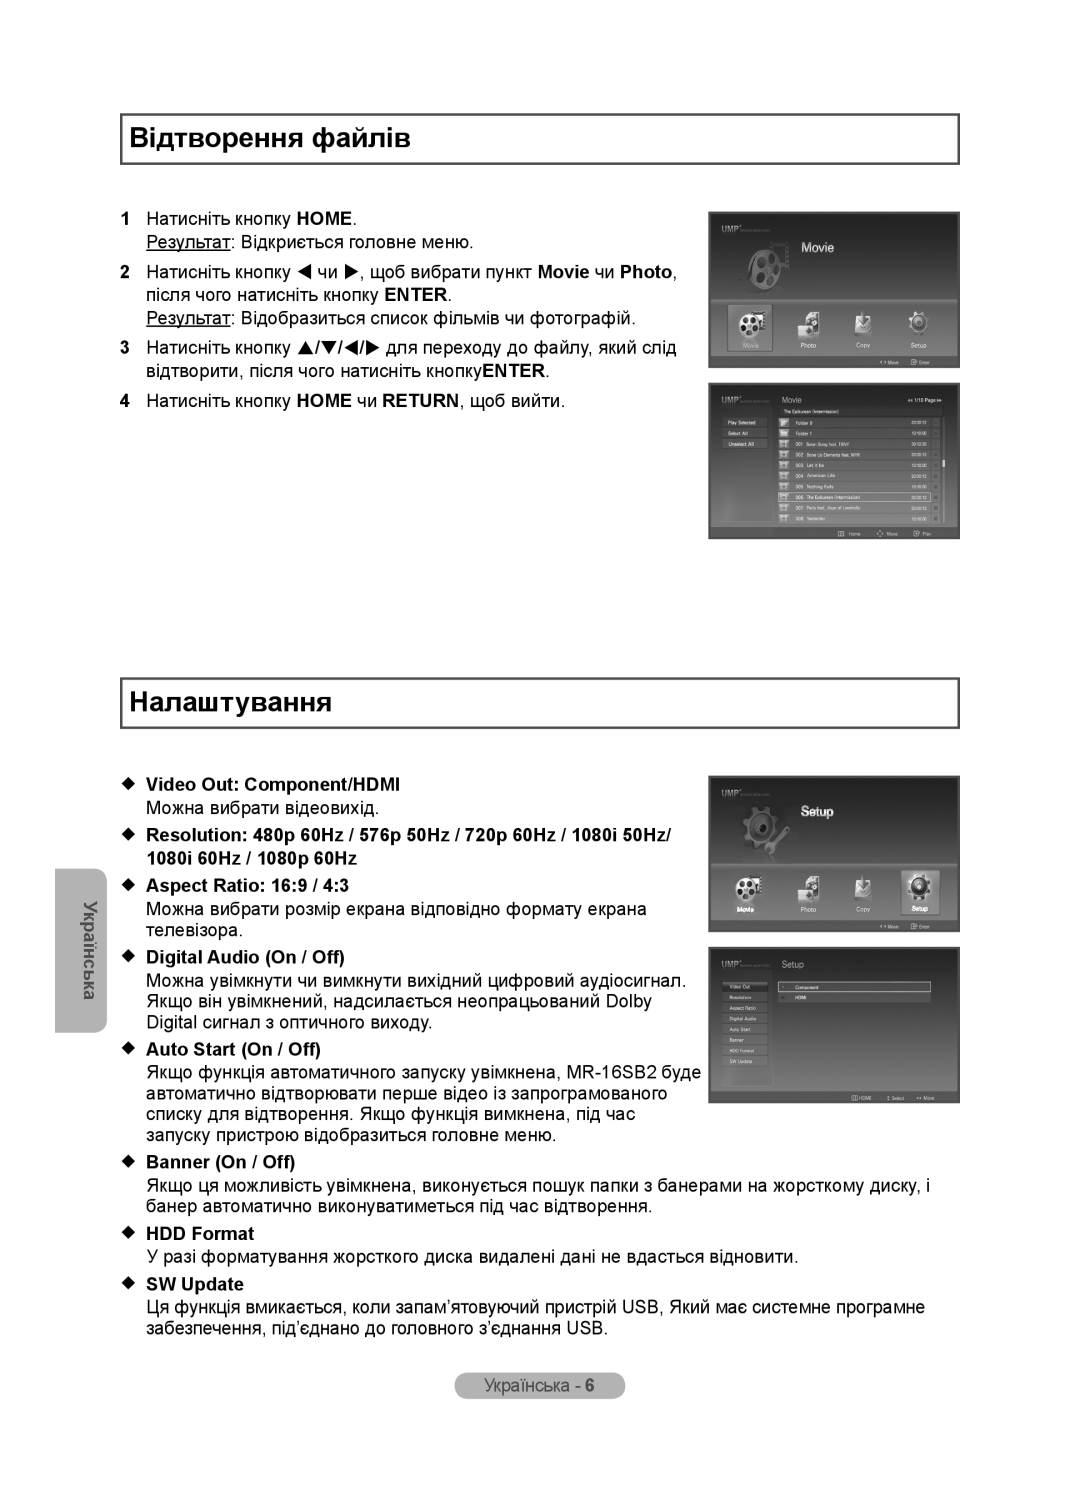 Samsung MR-16SB2 Відтворення файлів, Налаштування, Українська,  Video Out Component/HDMI,  Aspect Ratio 169,  SW Update 